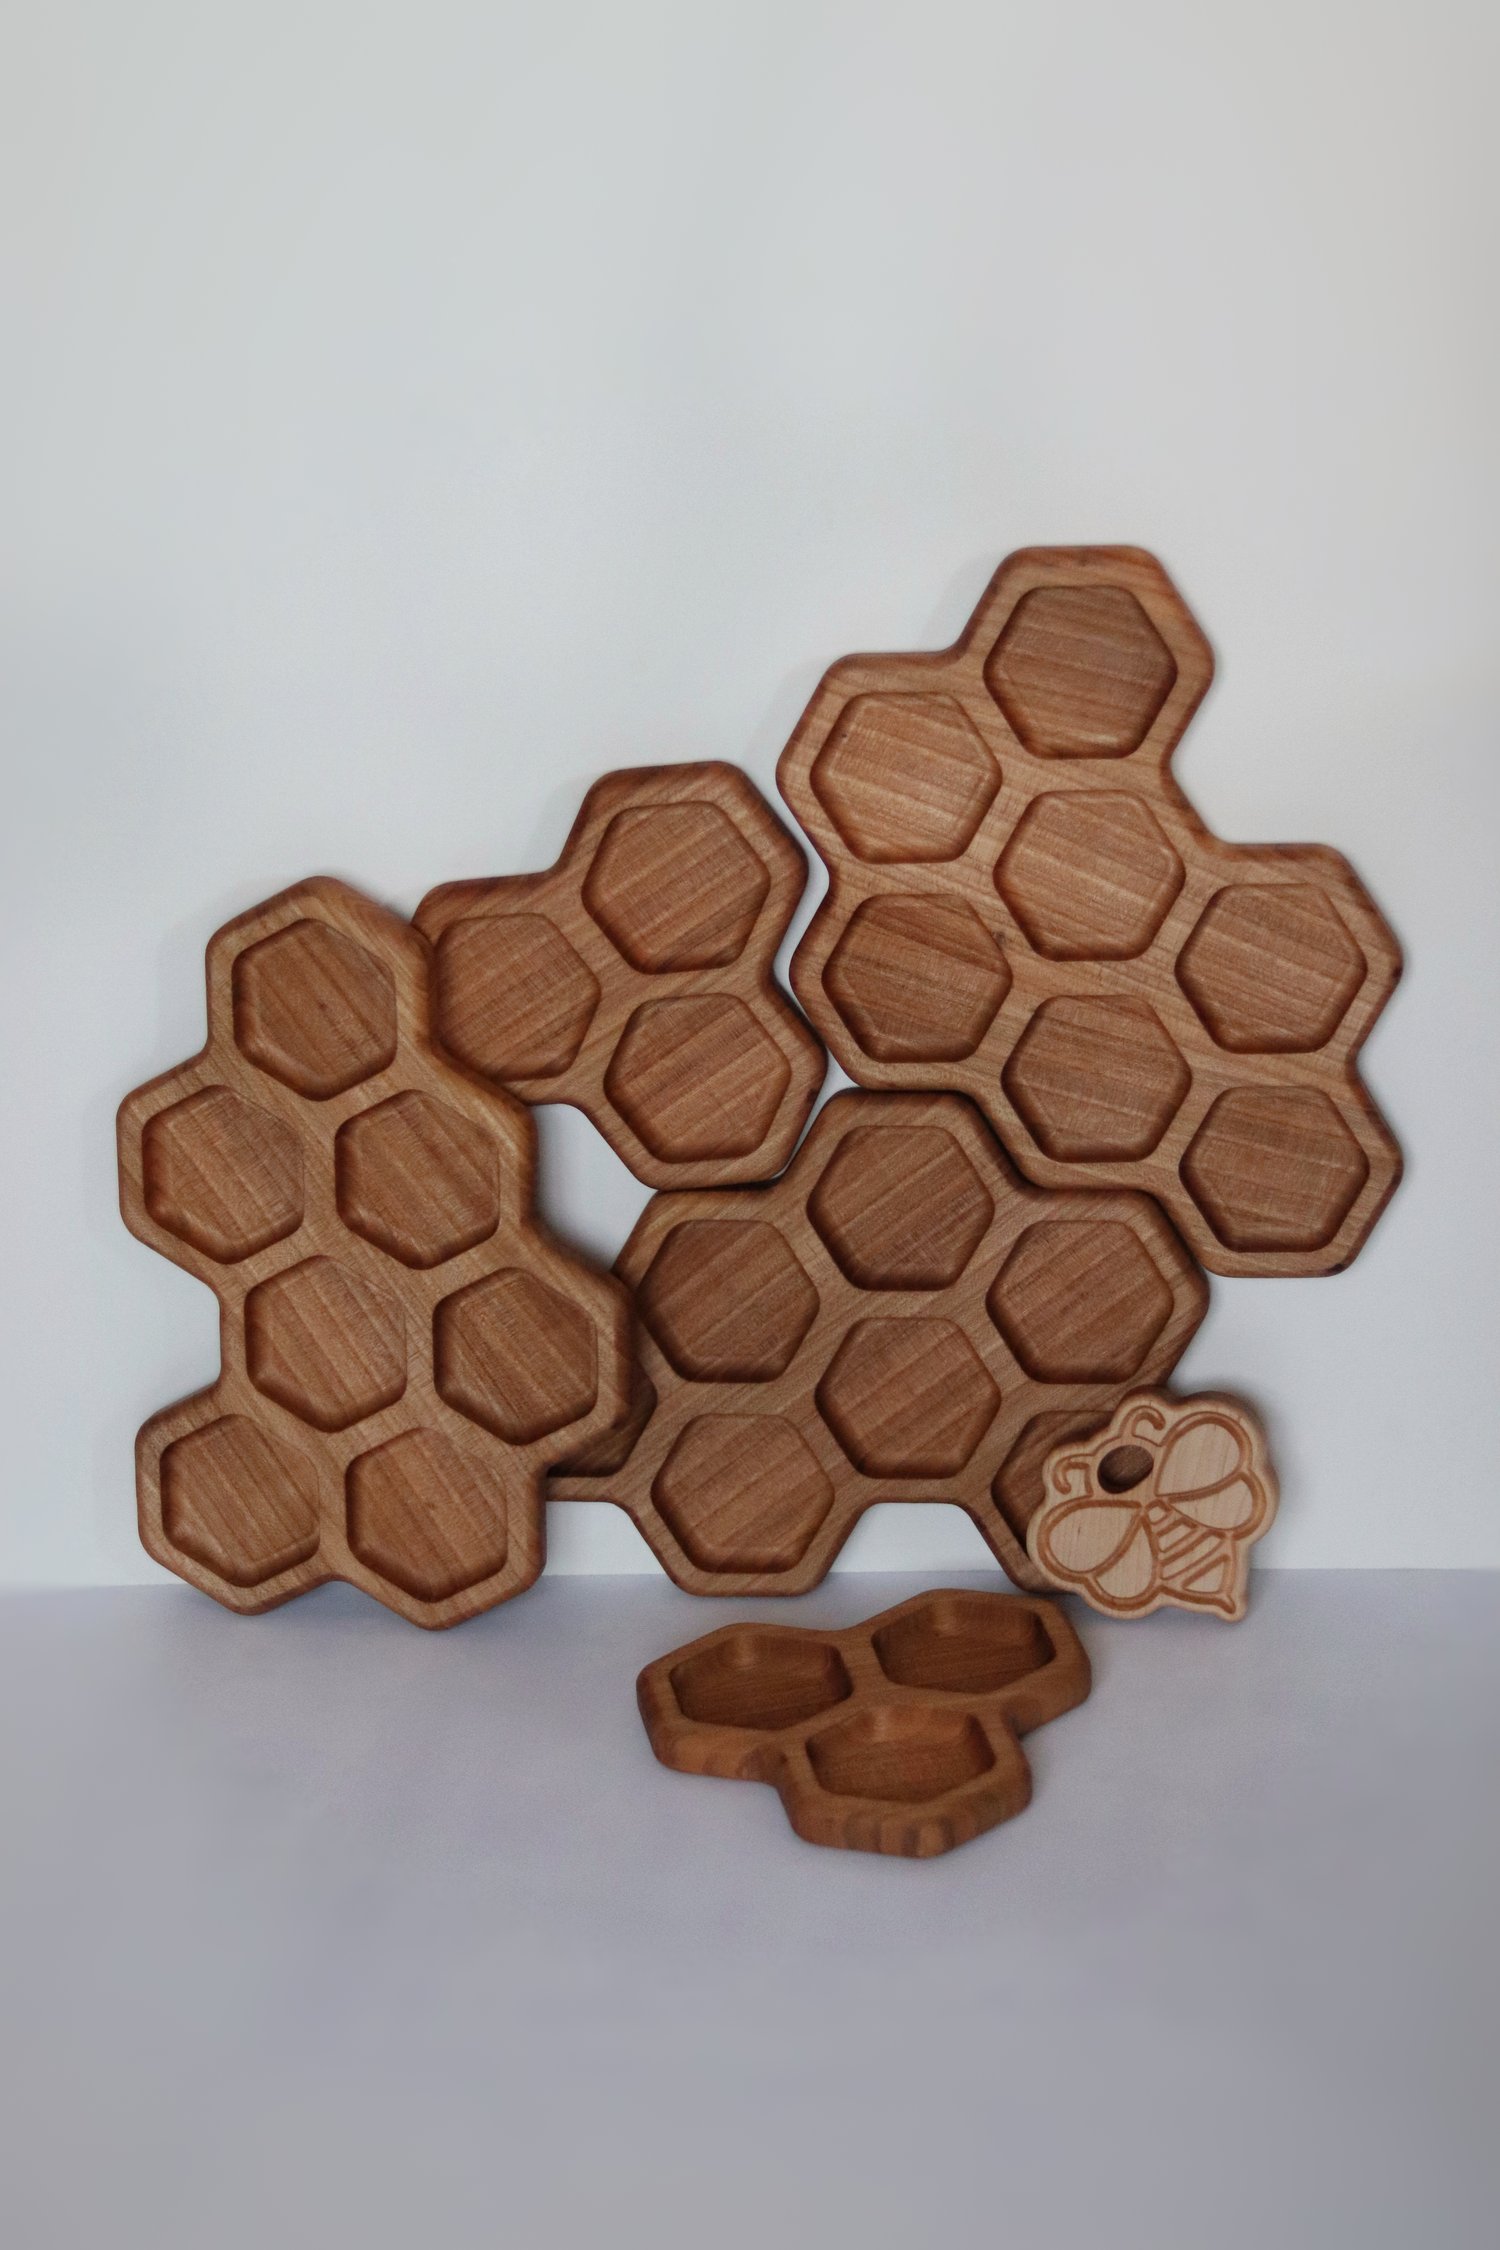 Honeycomb Trivet, Honeycomb Tray, Hot Plate, Wooden Sorting Tray